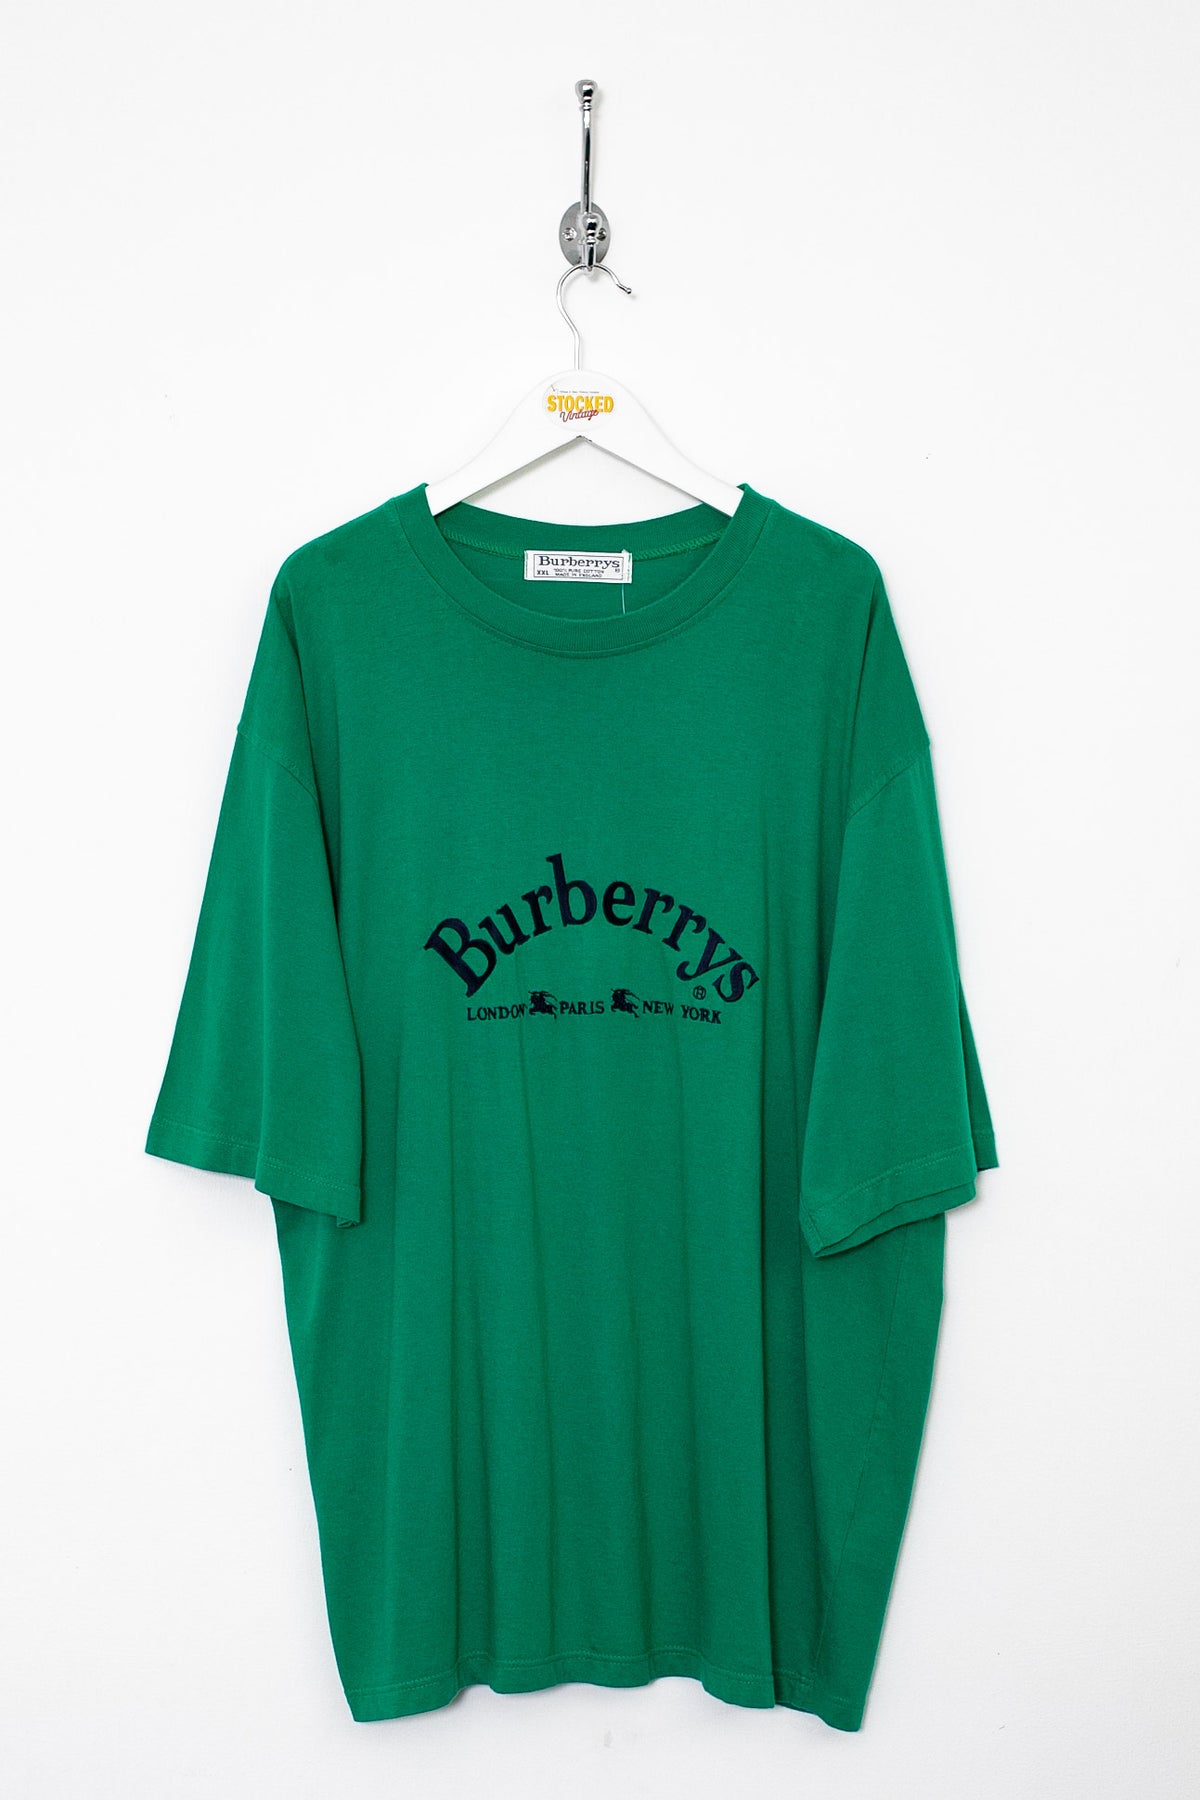 90s Burberry Tee (XXL)